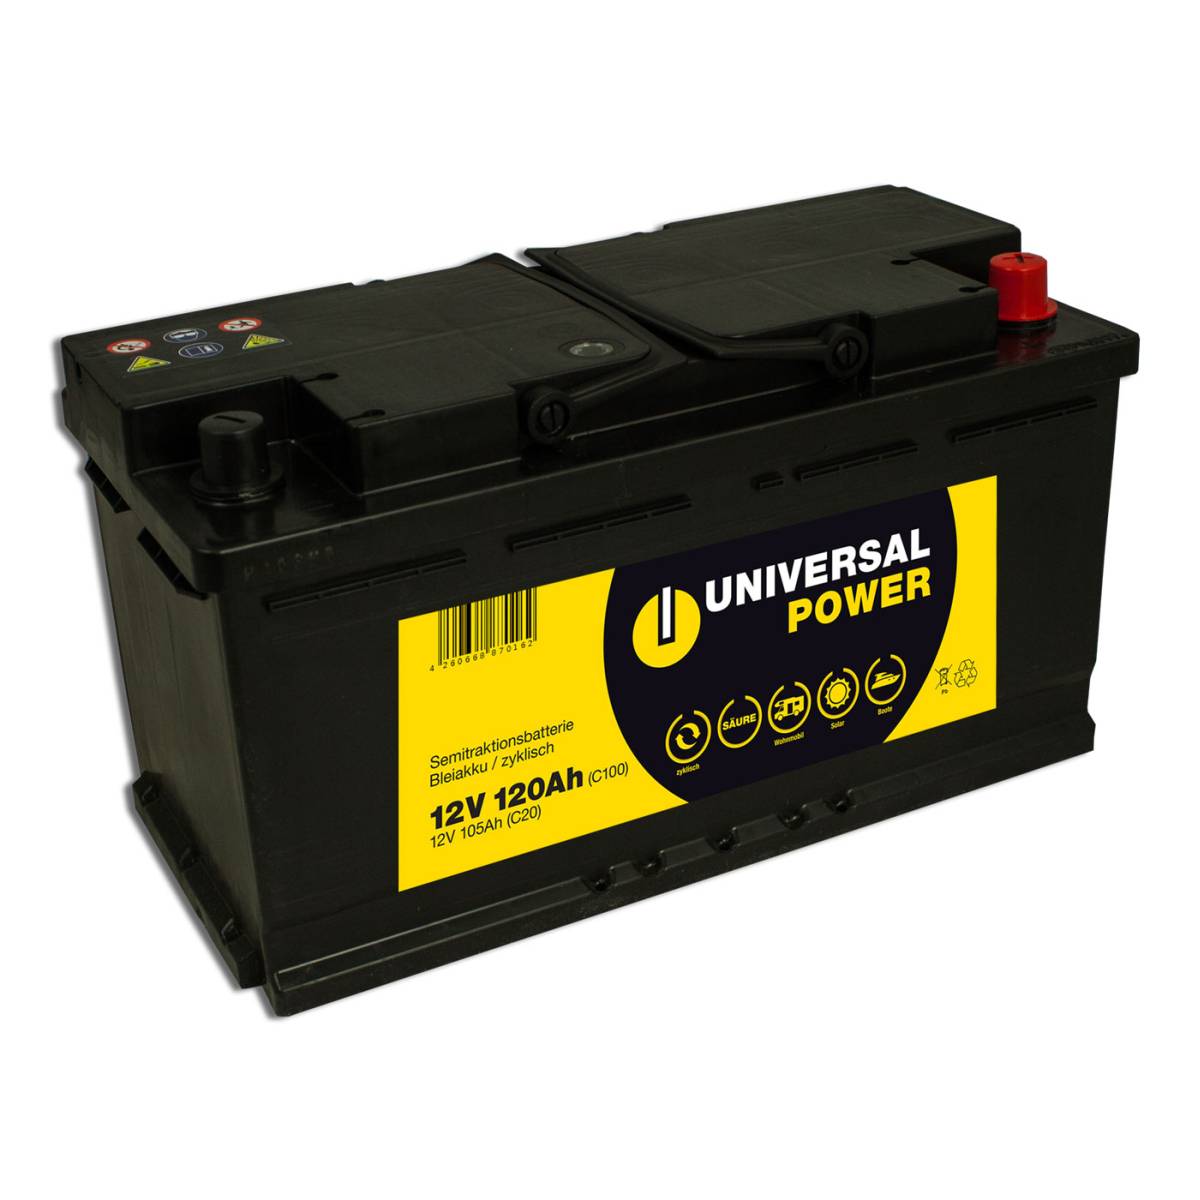 Universal Power Semitraction UPA12-120 12V 120Ah (C100) Batteria solare deep cycle